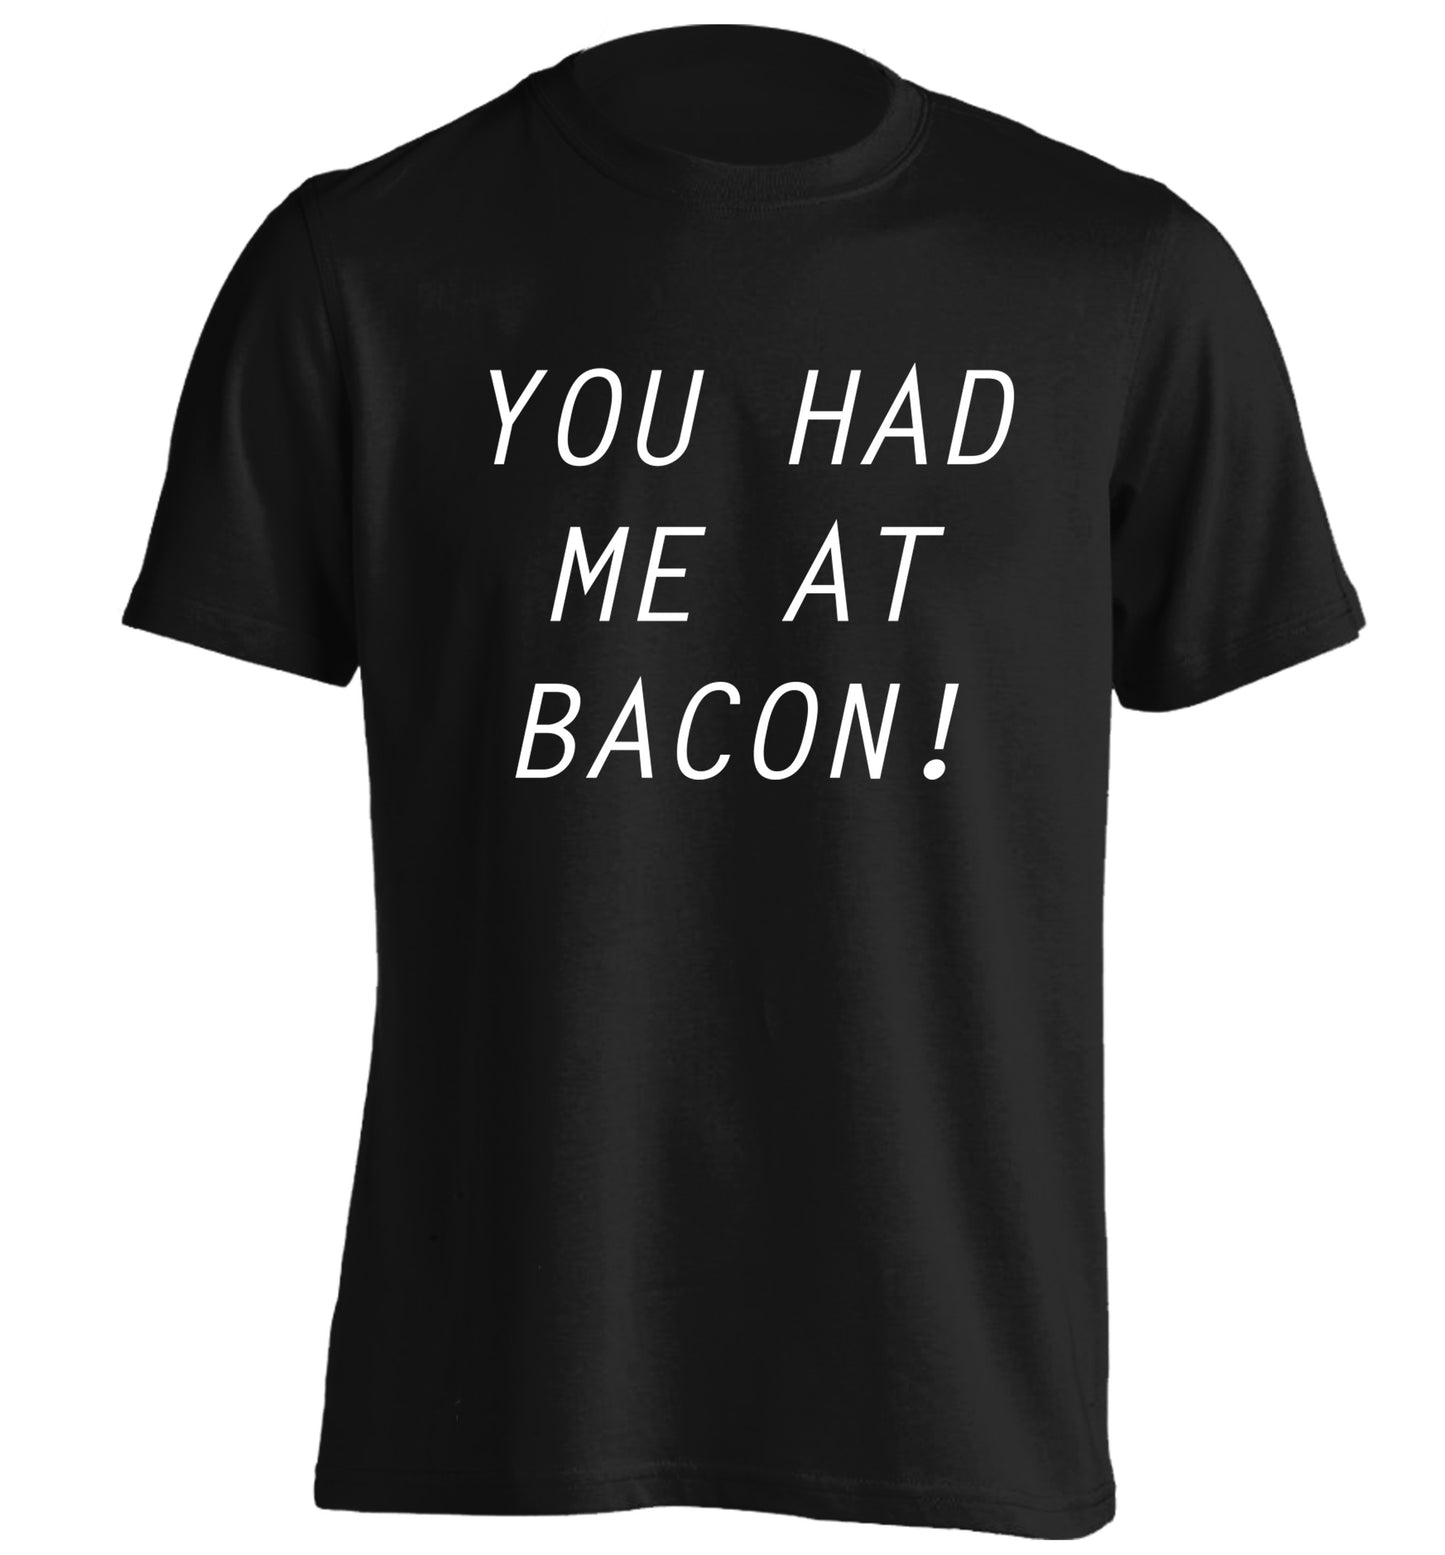 You had me at bacon adults unisex black Tshirt 2XL